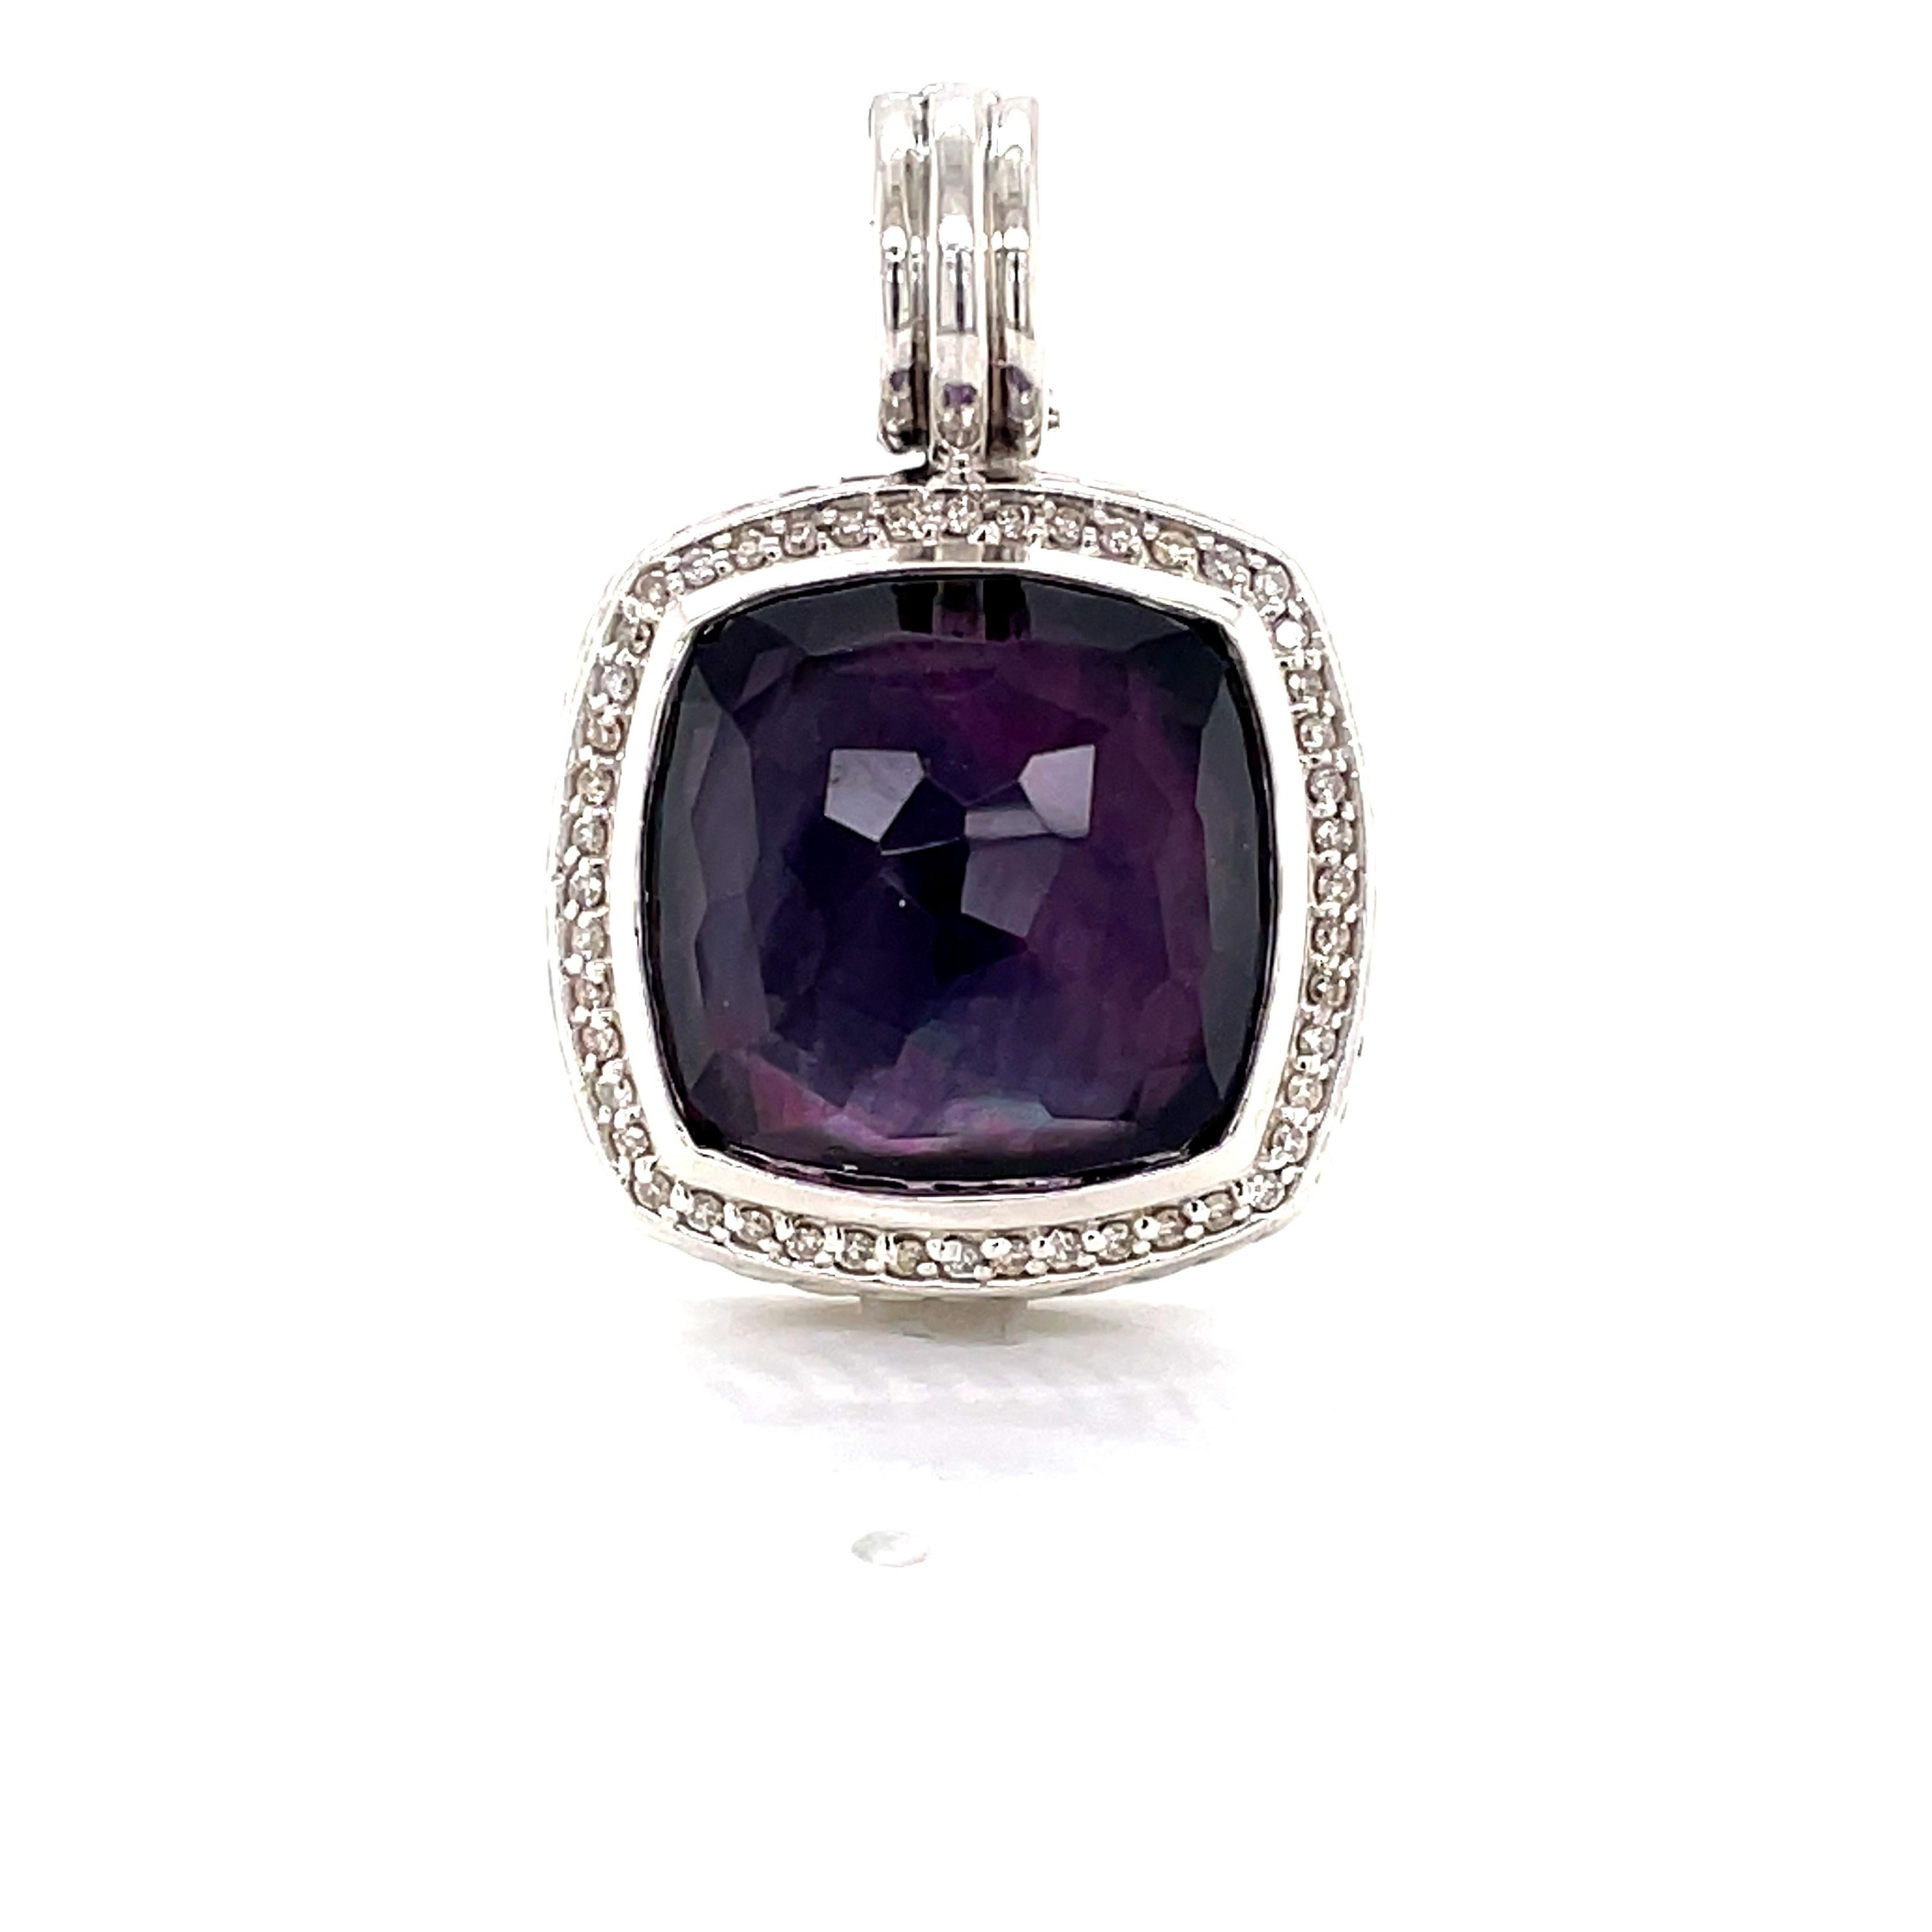 David Yurman Black Orchid Albion Jewelry Suite w Ring, Earrings, Pendant For Sale 2